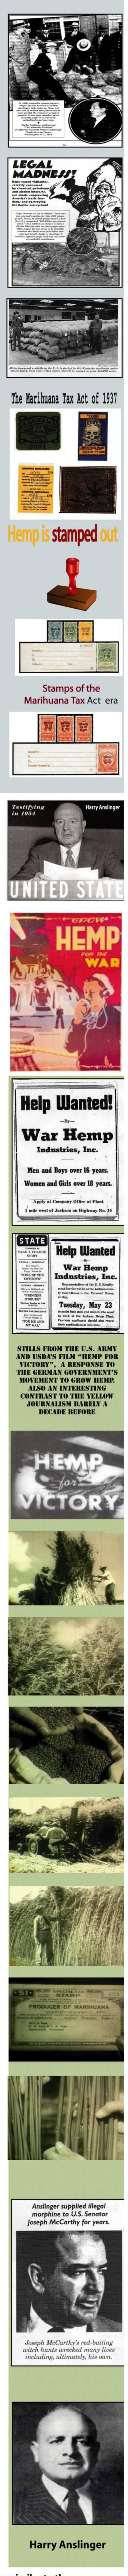 Prohibition 3, US Hemp Co Museum